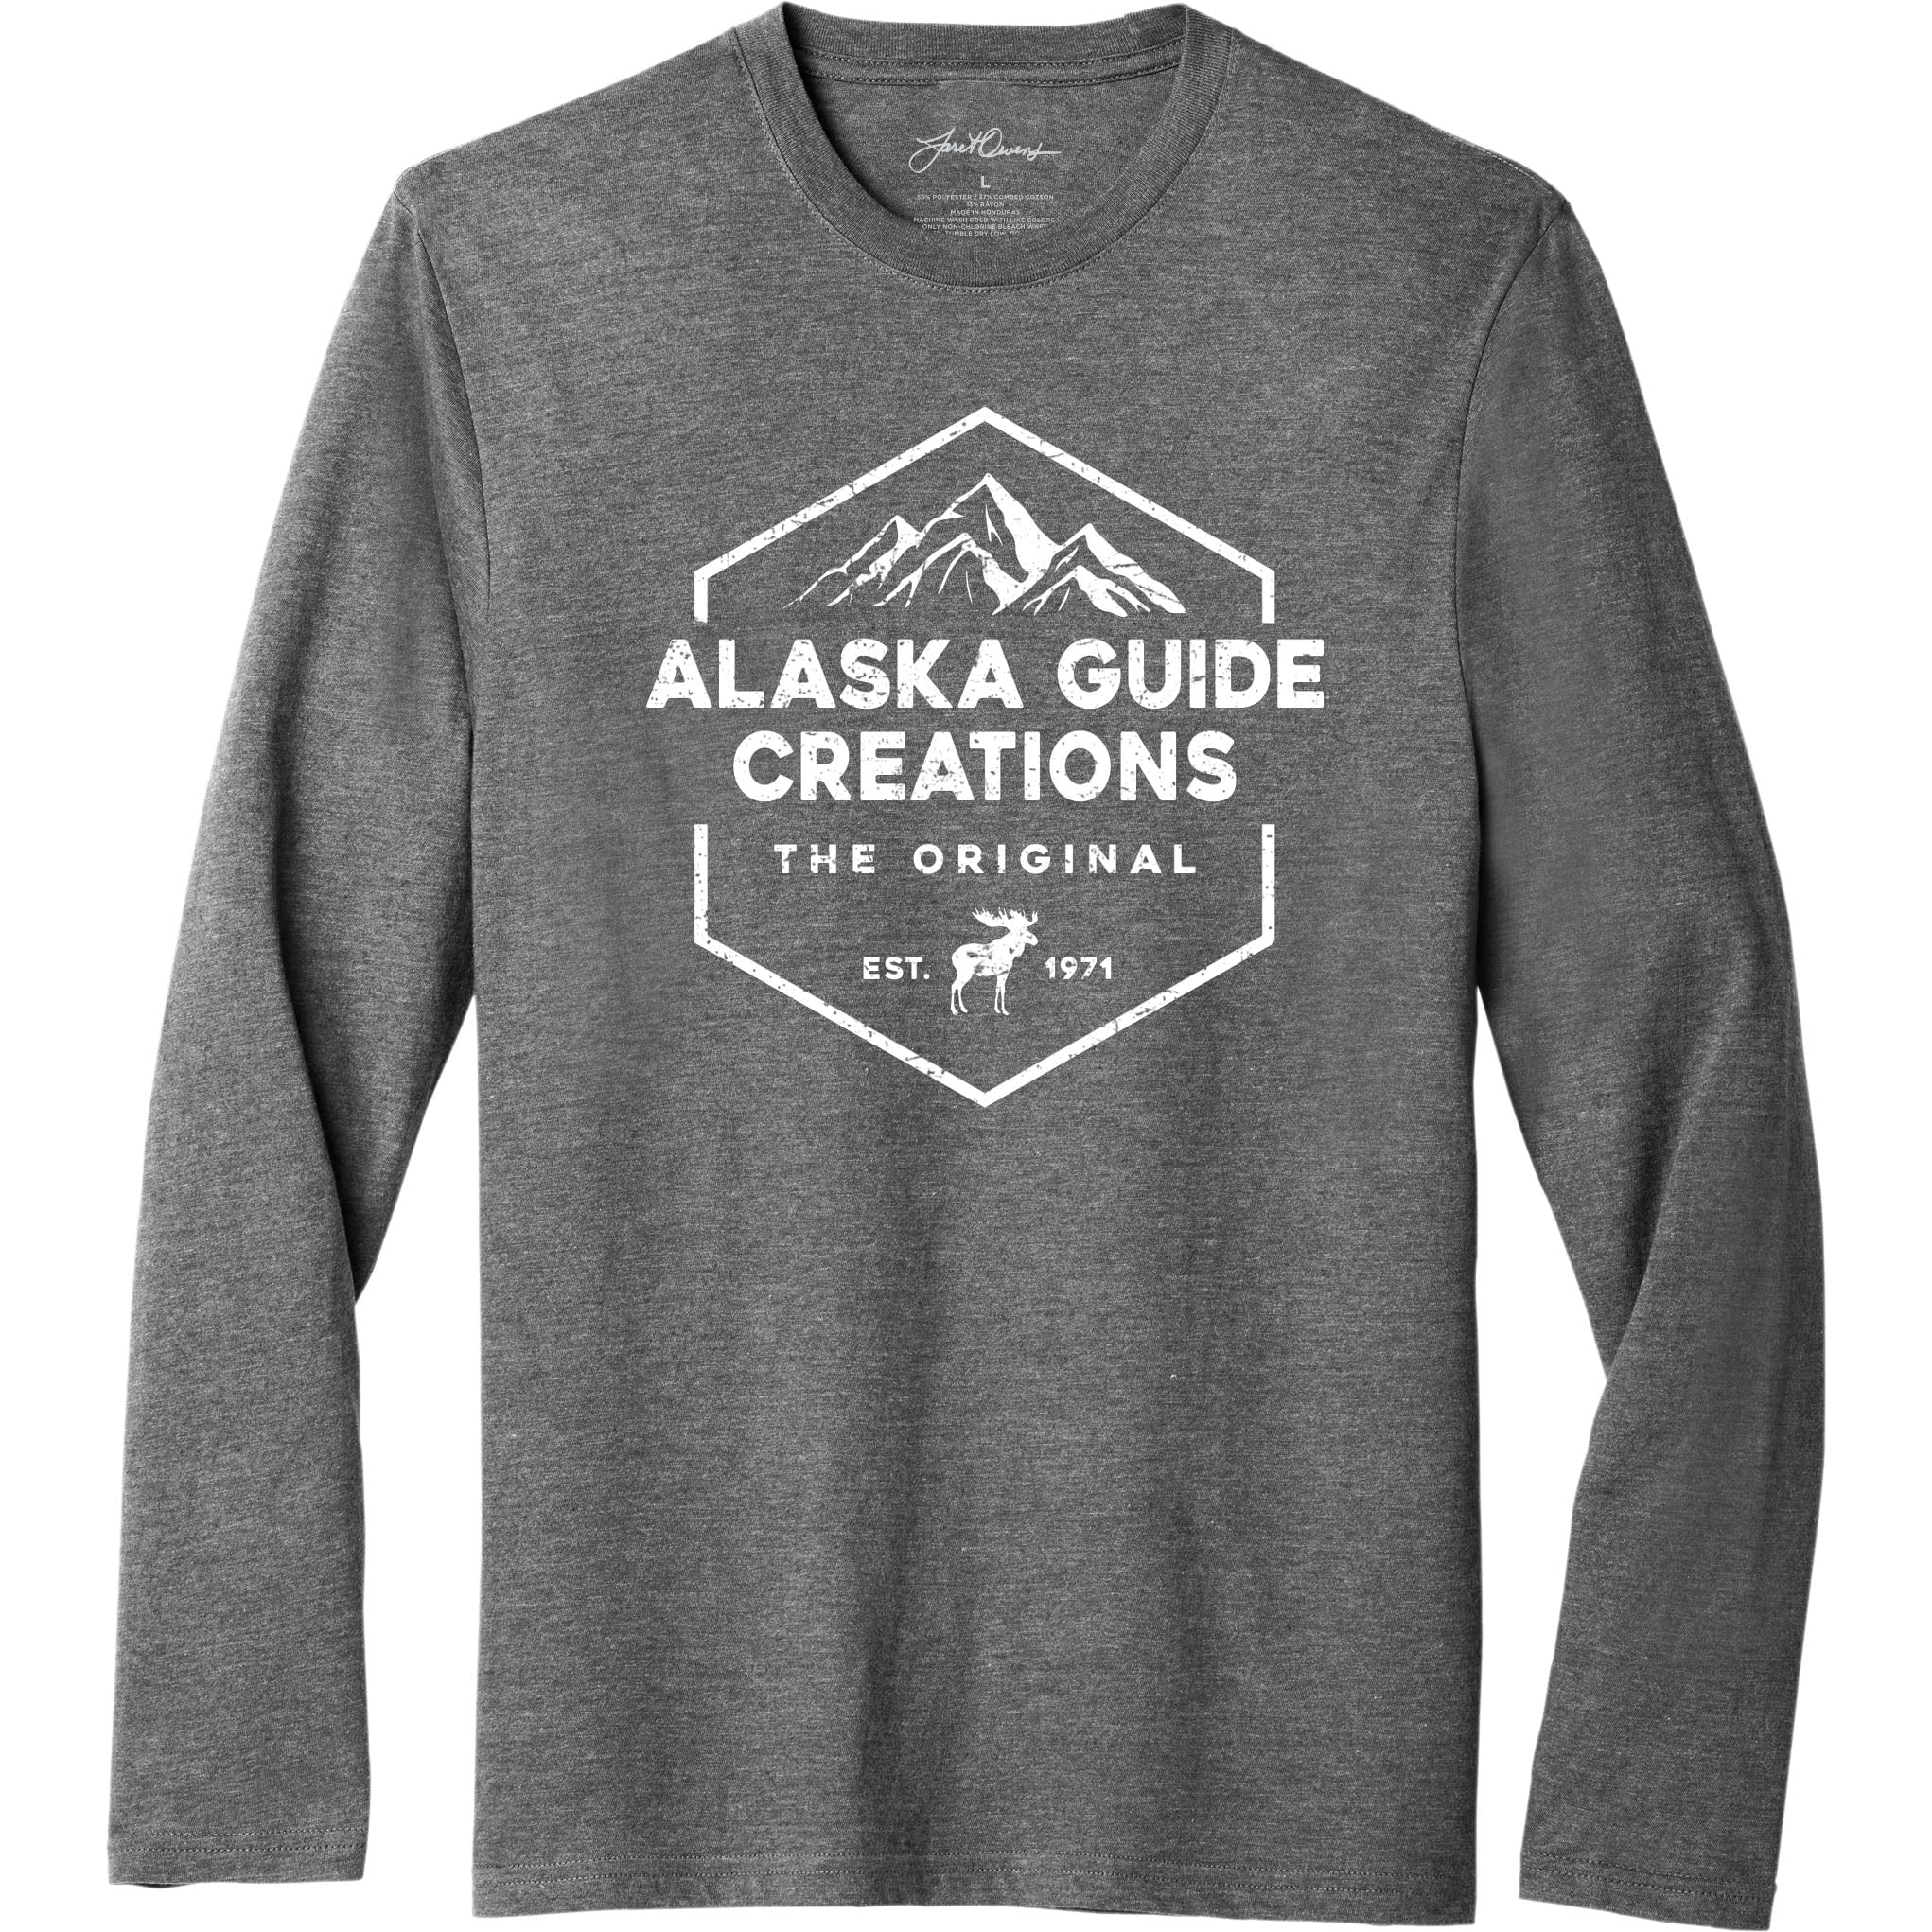 Long Sleeve T - The Original Alaska Guide Creations Graphite Heather XXL 